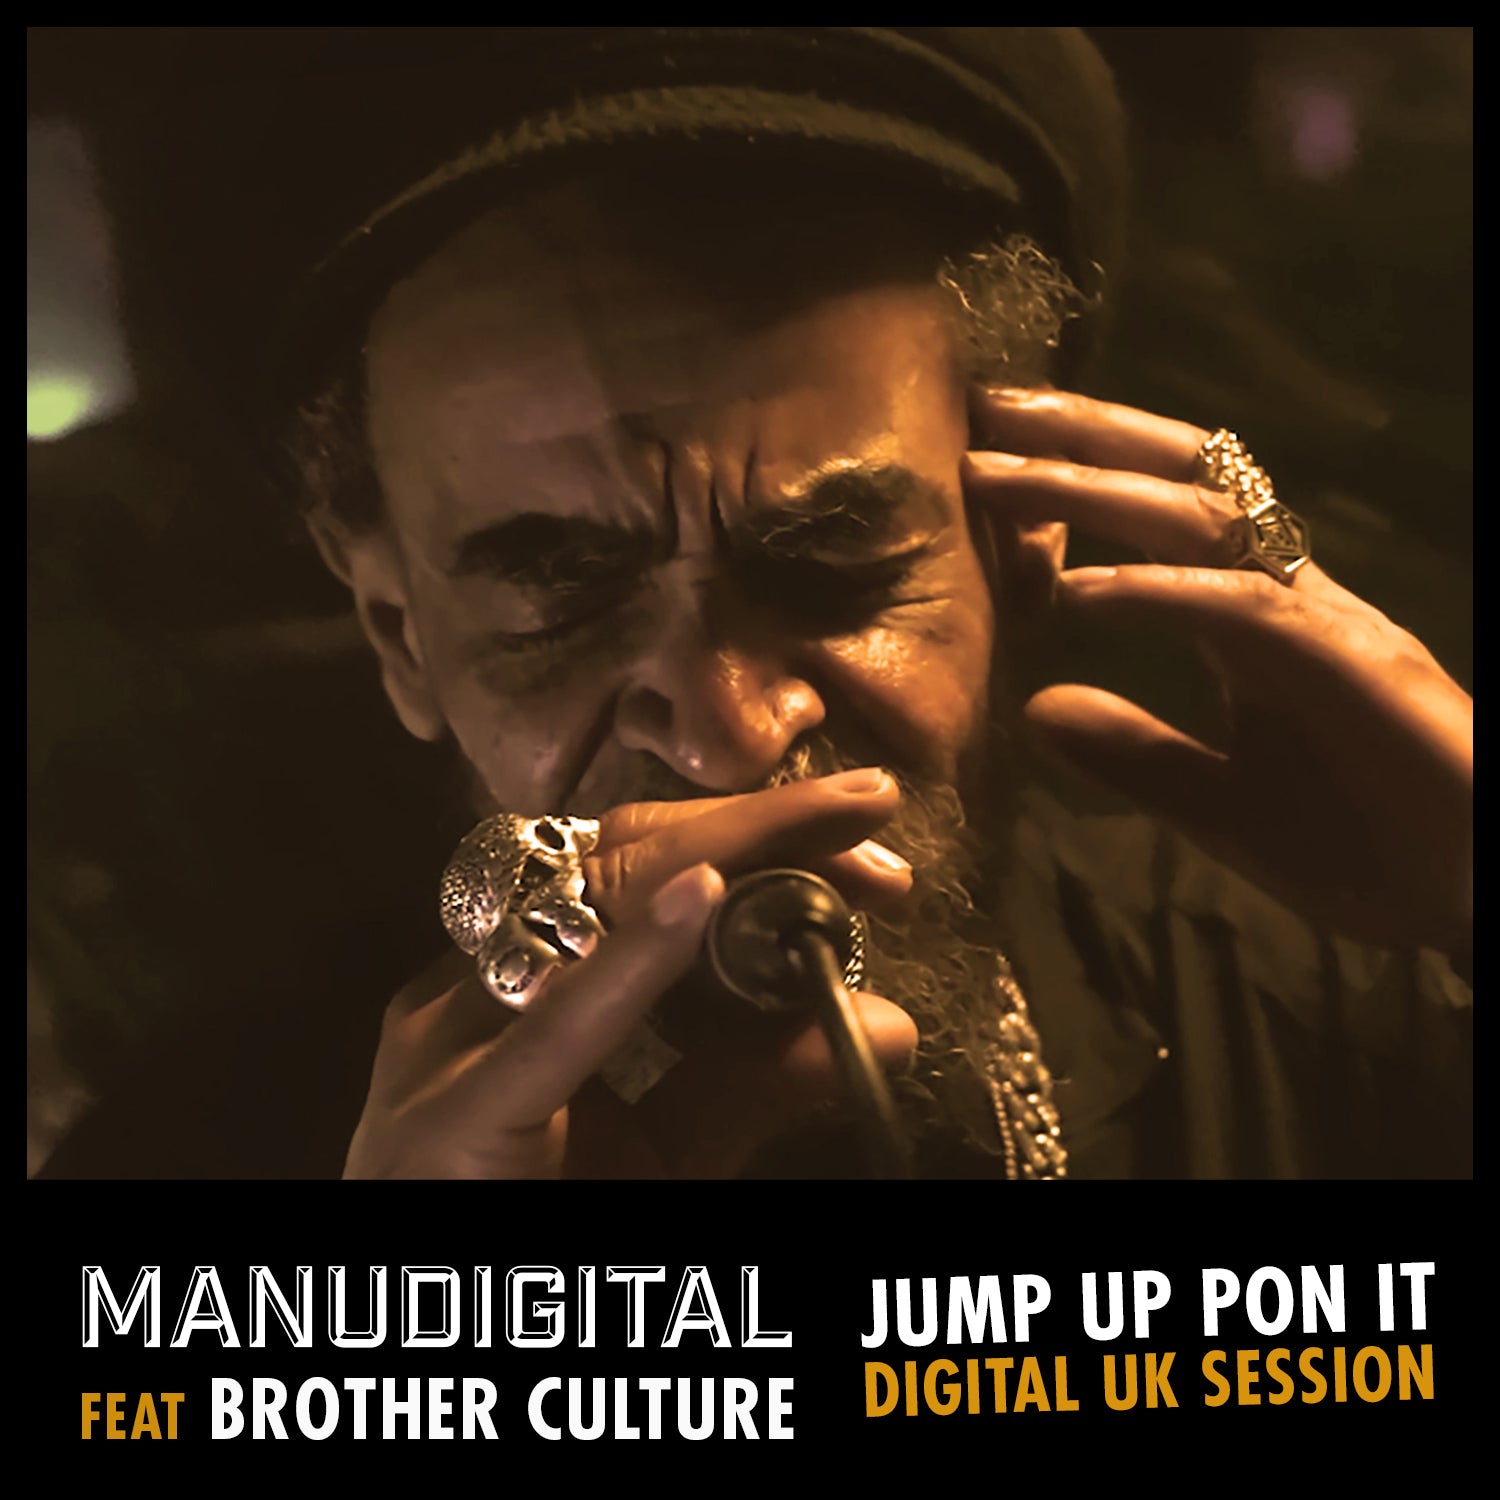 Manudigital Digital UK Session feat Brother Culture Jump Up Pon It